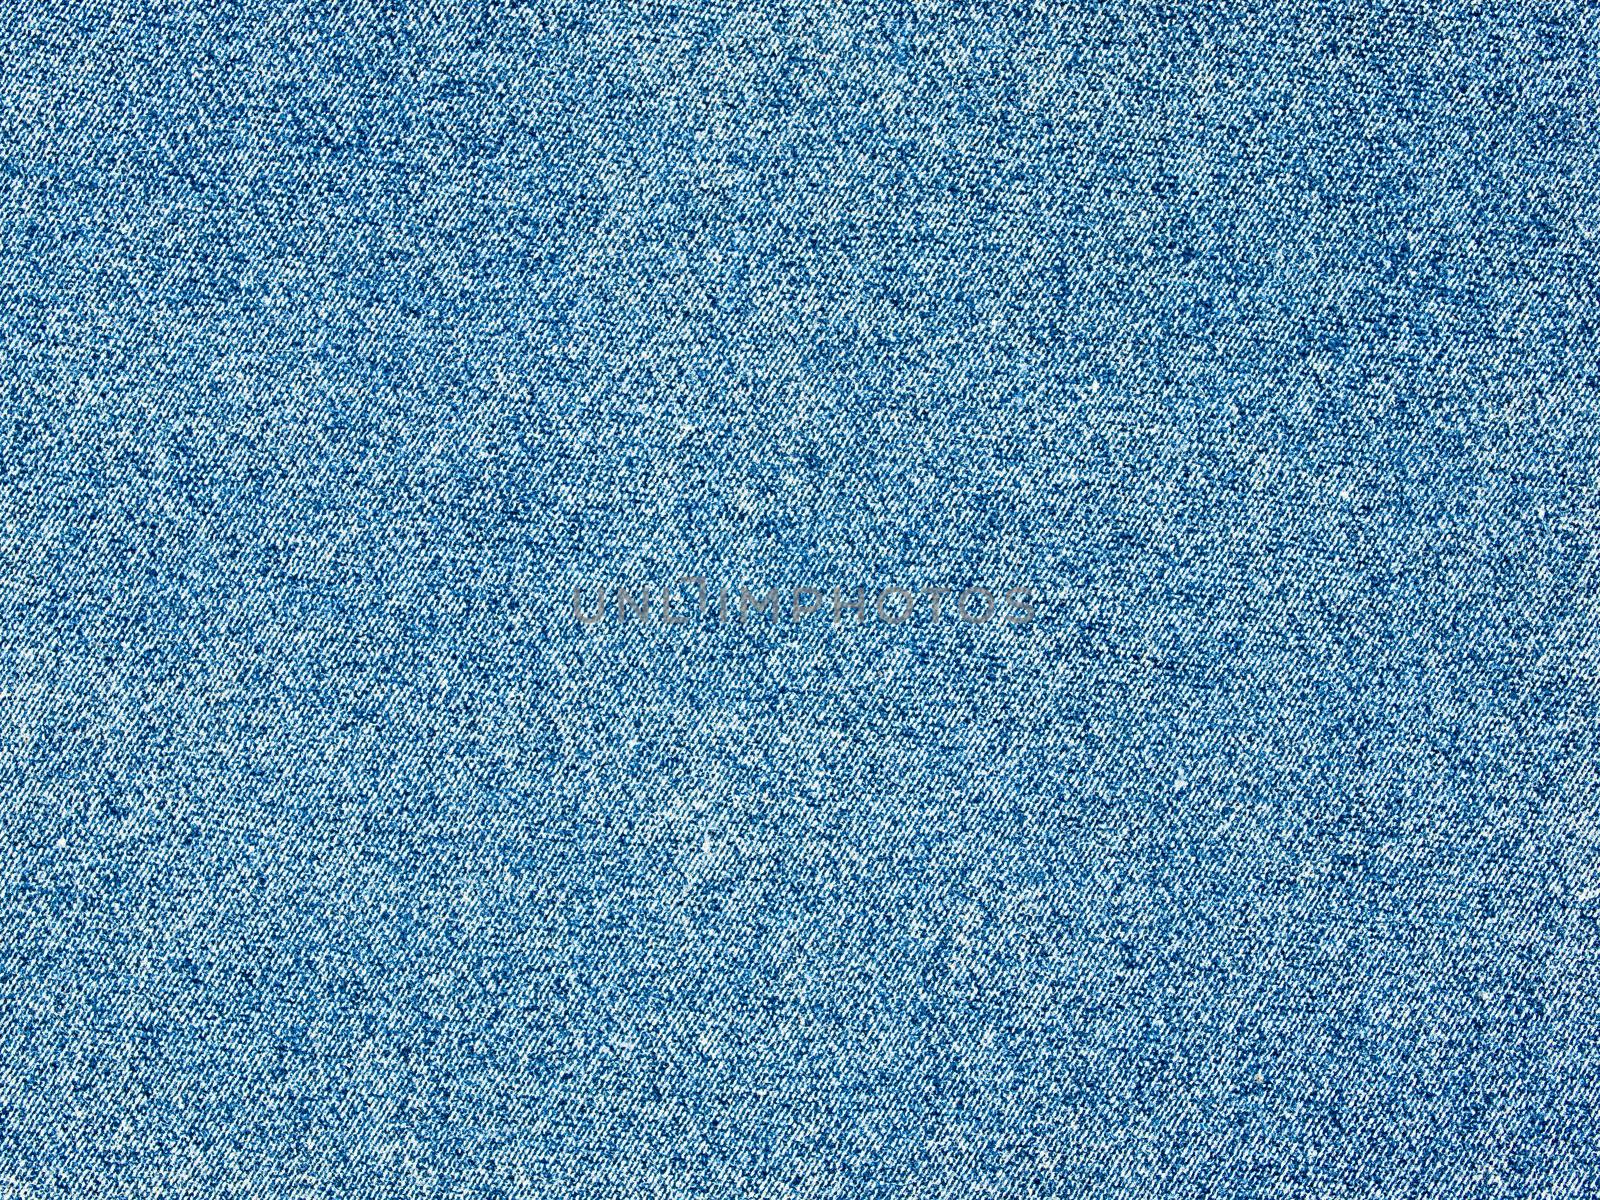 Full Frame Background of a Blue Denim Fabric Pattern by Frankljunior